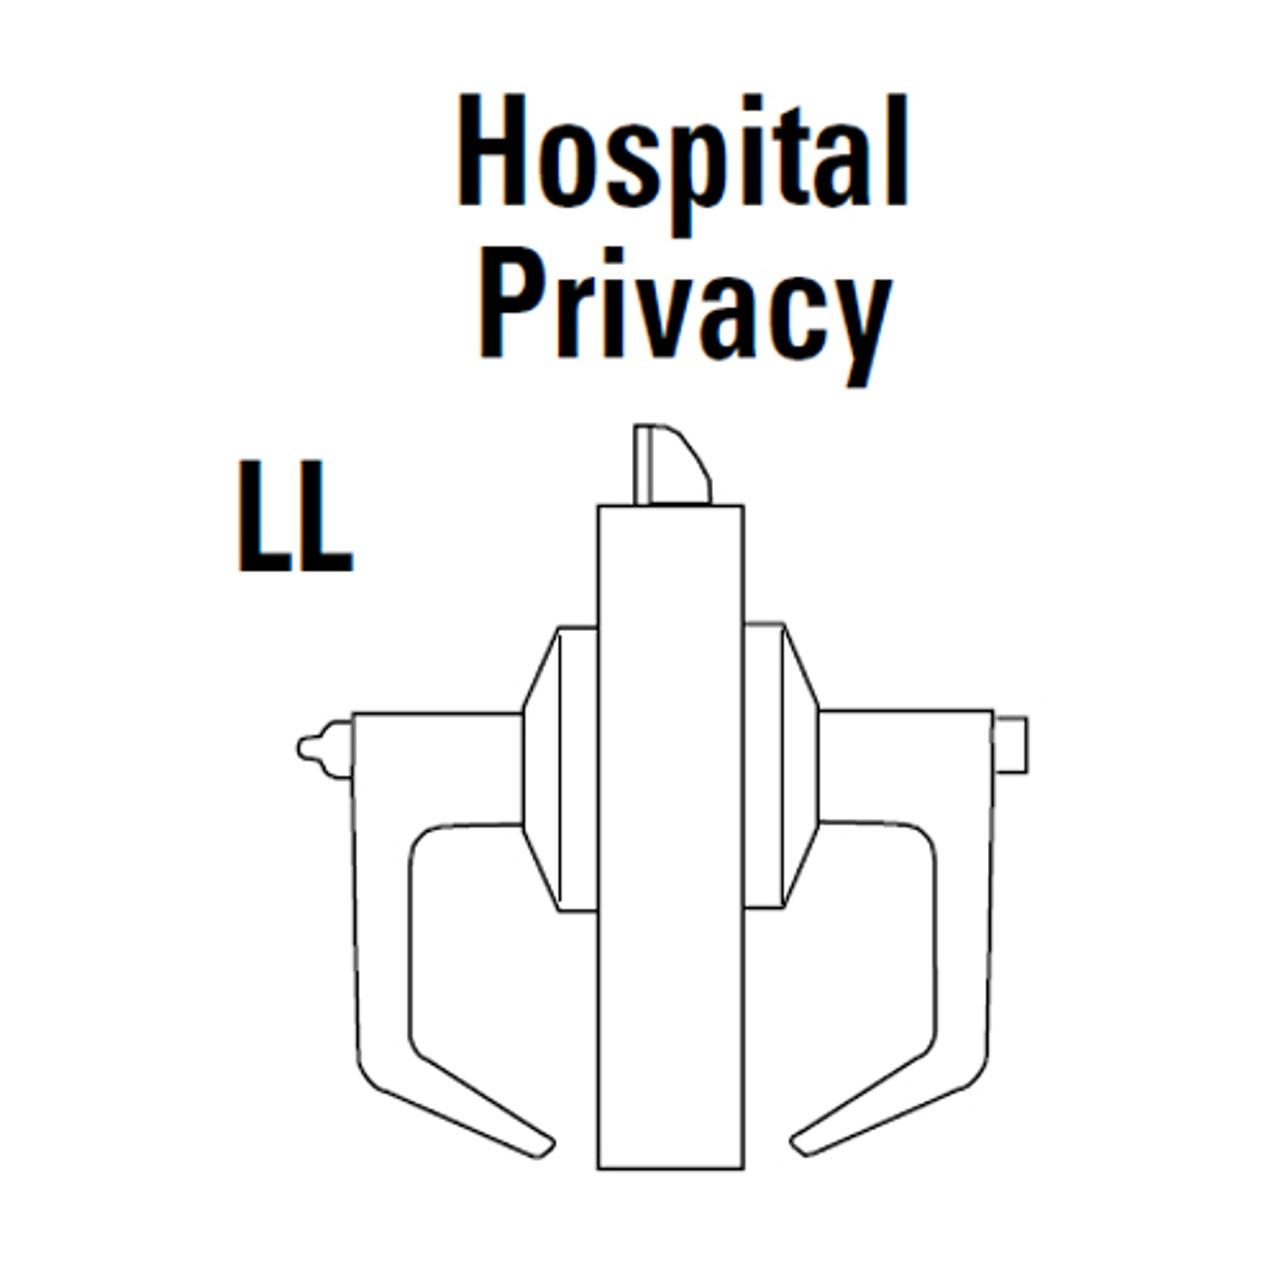 9K30LL14CSTK611 Best 9K Series Hospital Privacy Heavy Duty Cylindrical Lever Locks in Bright Bronze